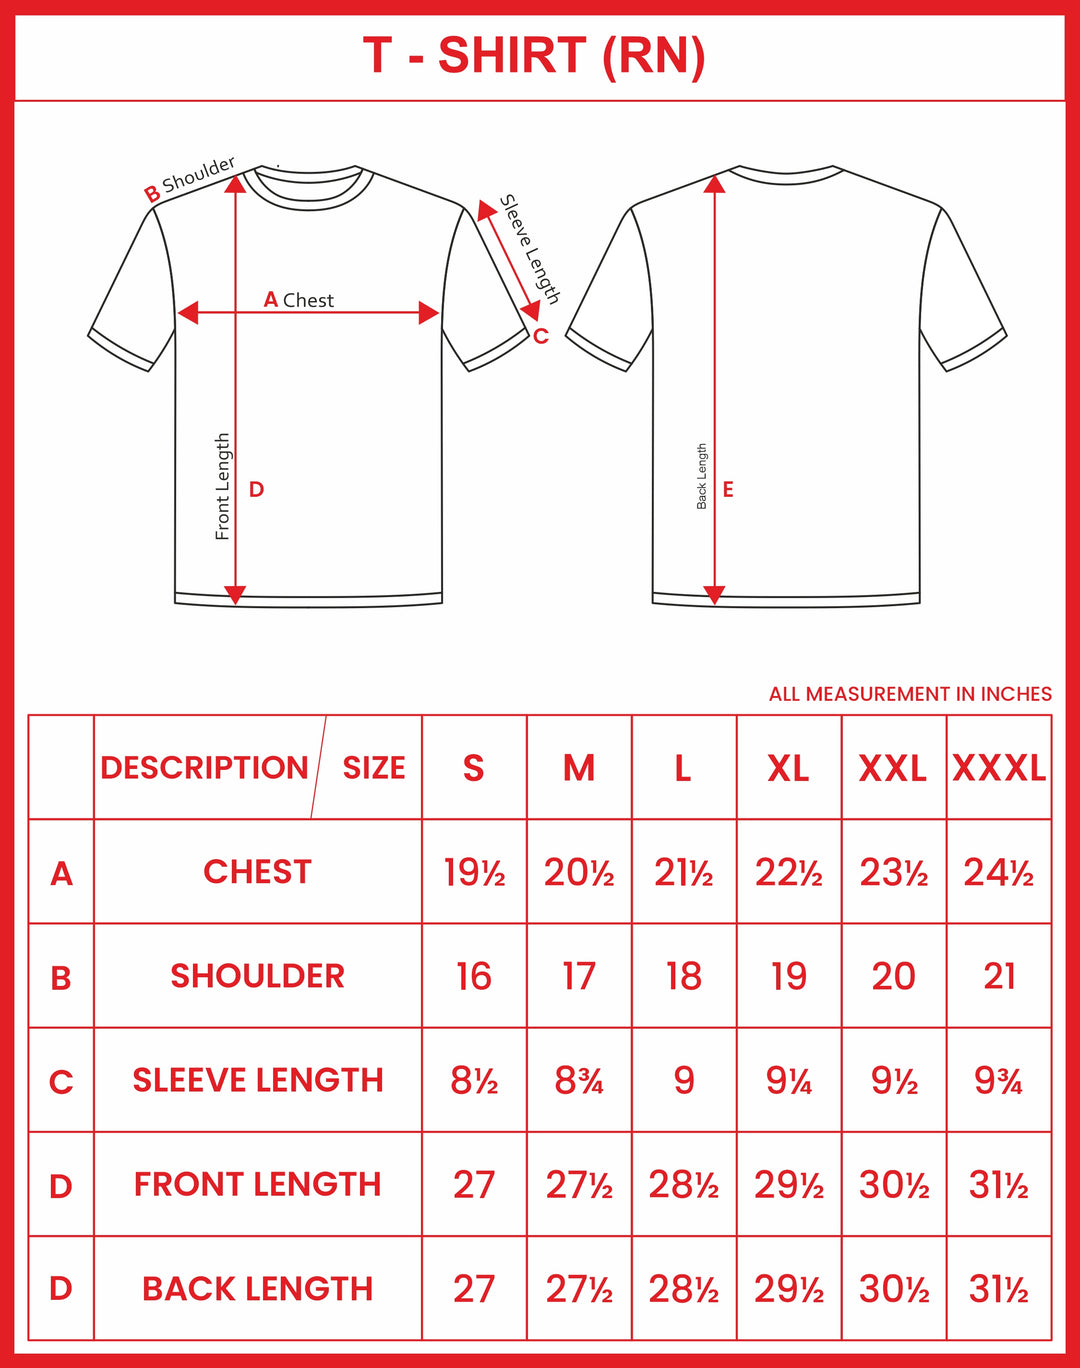 Round Neck - Coral Peach Solid T-Shirt For Men | Ariser